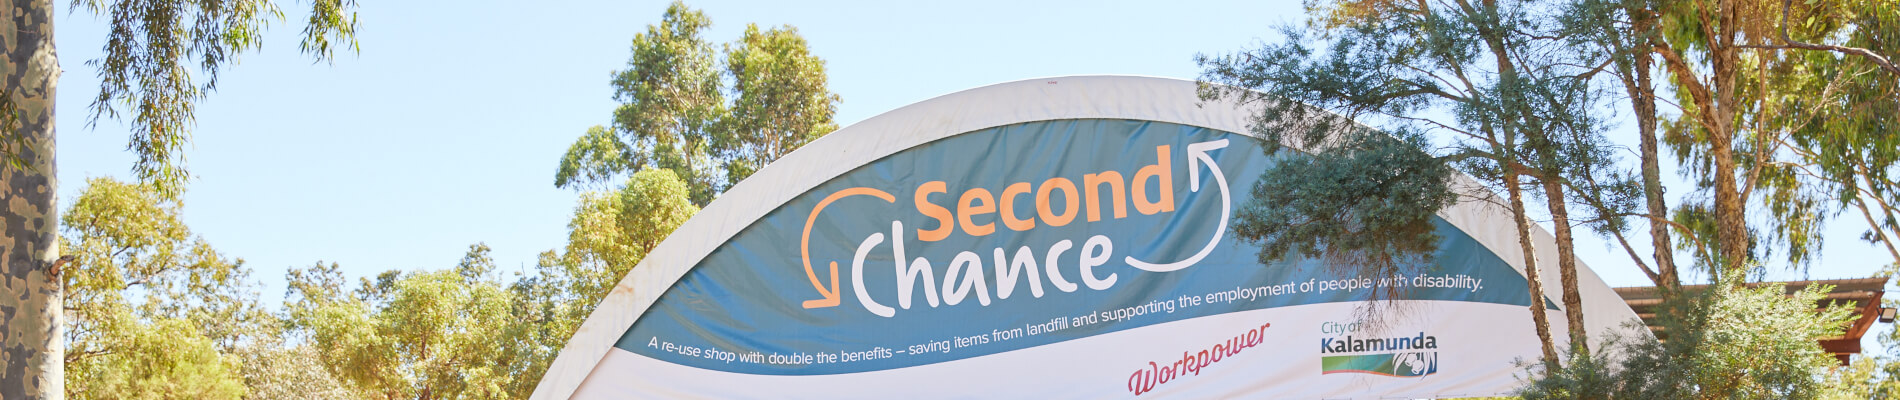 Walliston Transfer Station - Second Chance signage